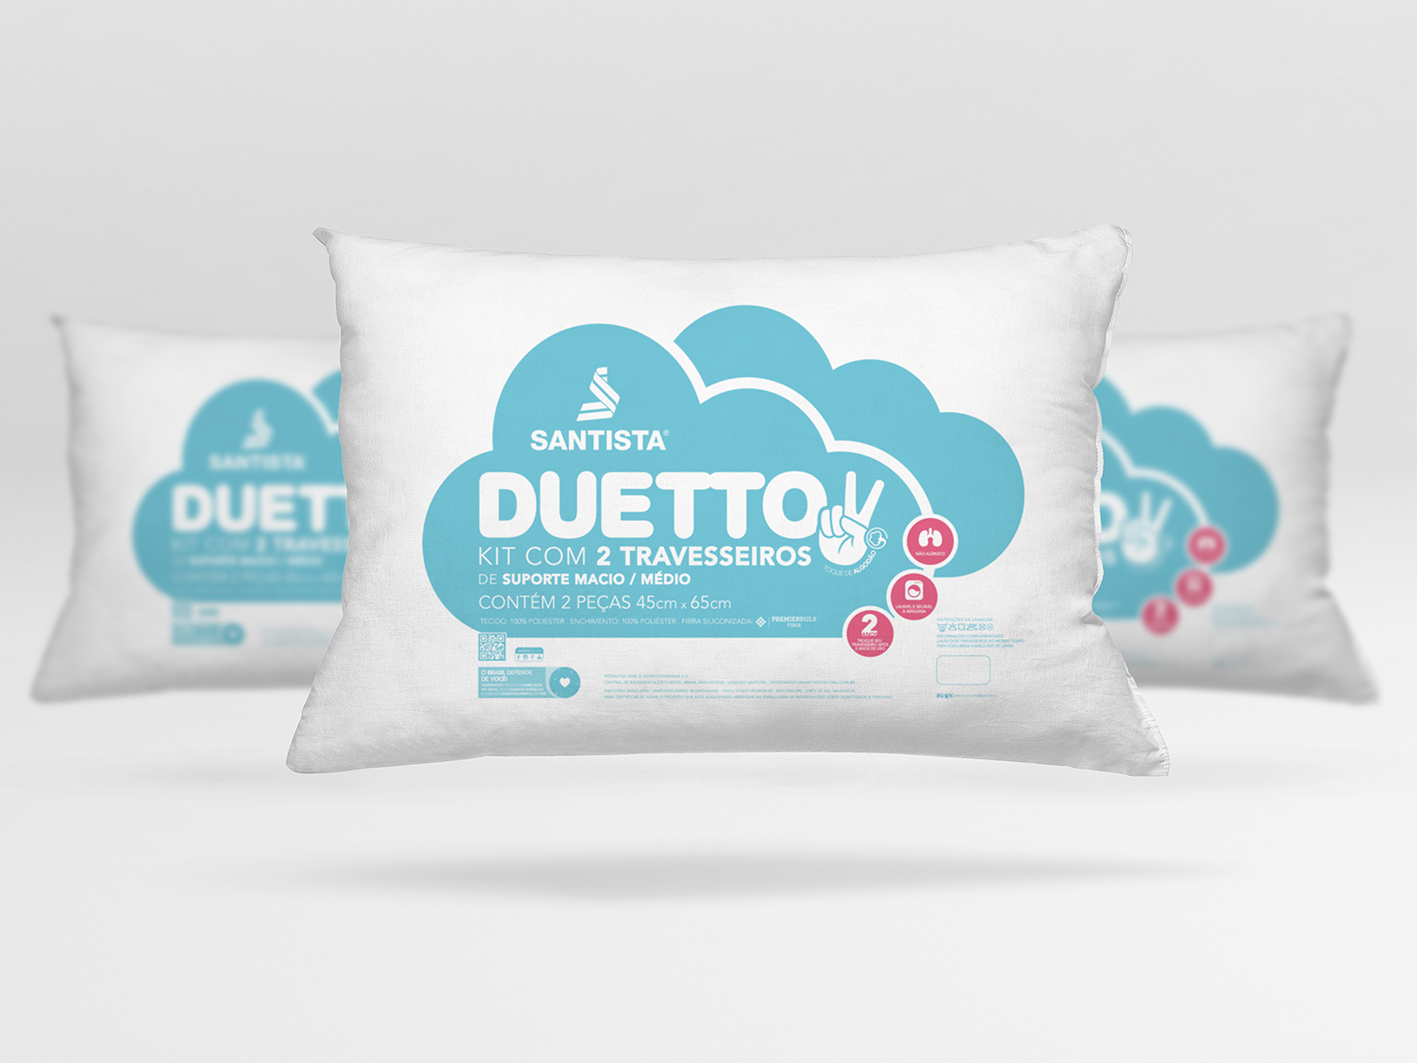 Pillow Packaging Redesign for Santista by Estúdio Único